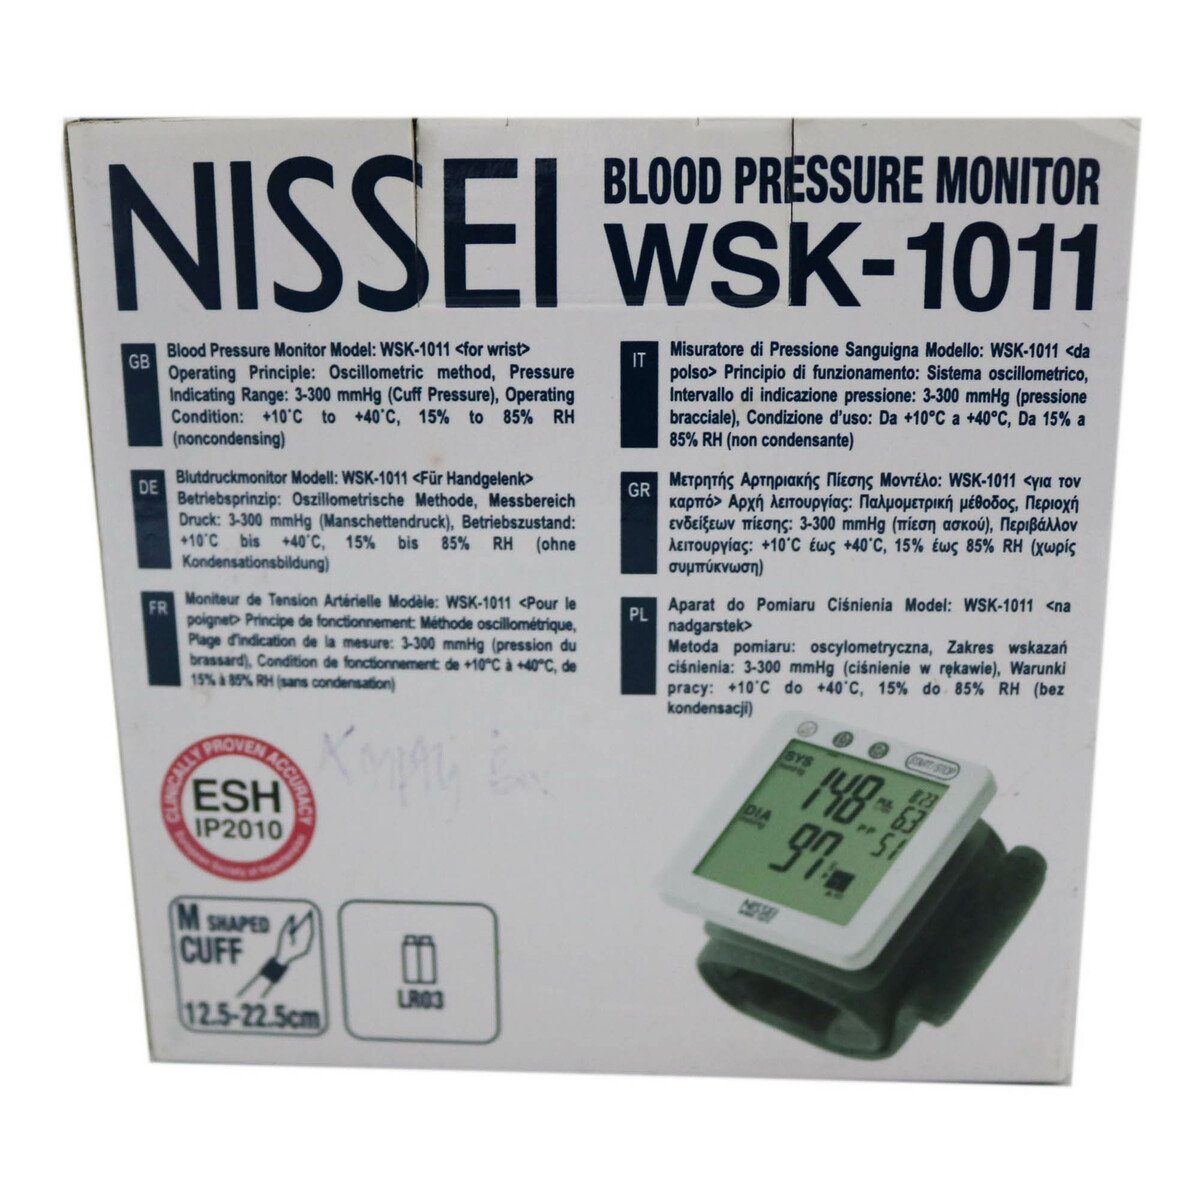 Nissei Blood Pressure Monitor Wsk-1011